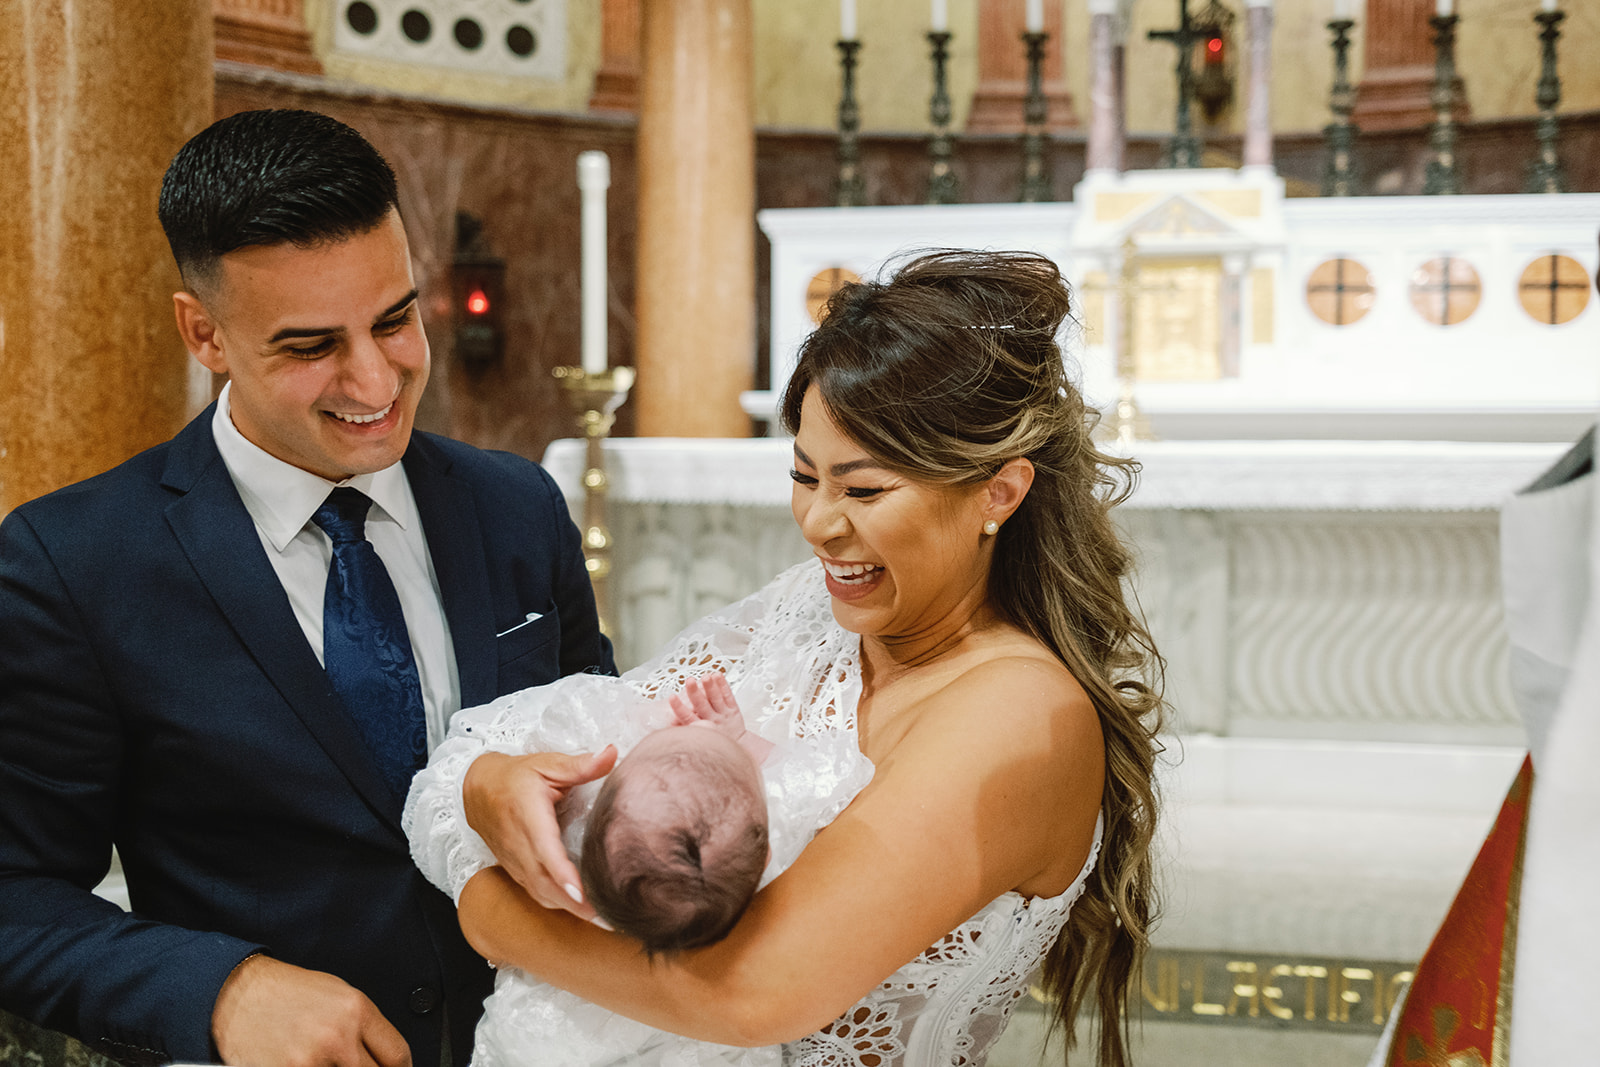 Baby Baptism - St. Andrews Catholic Church - Pasadena, California - The Ivy - West Hollywood, California